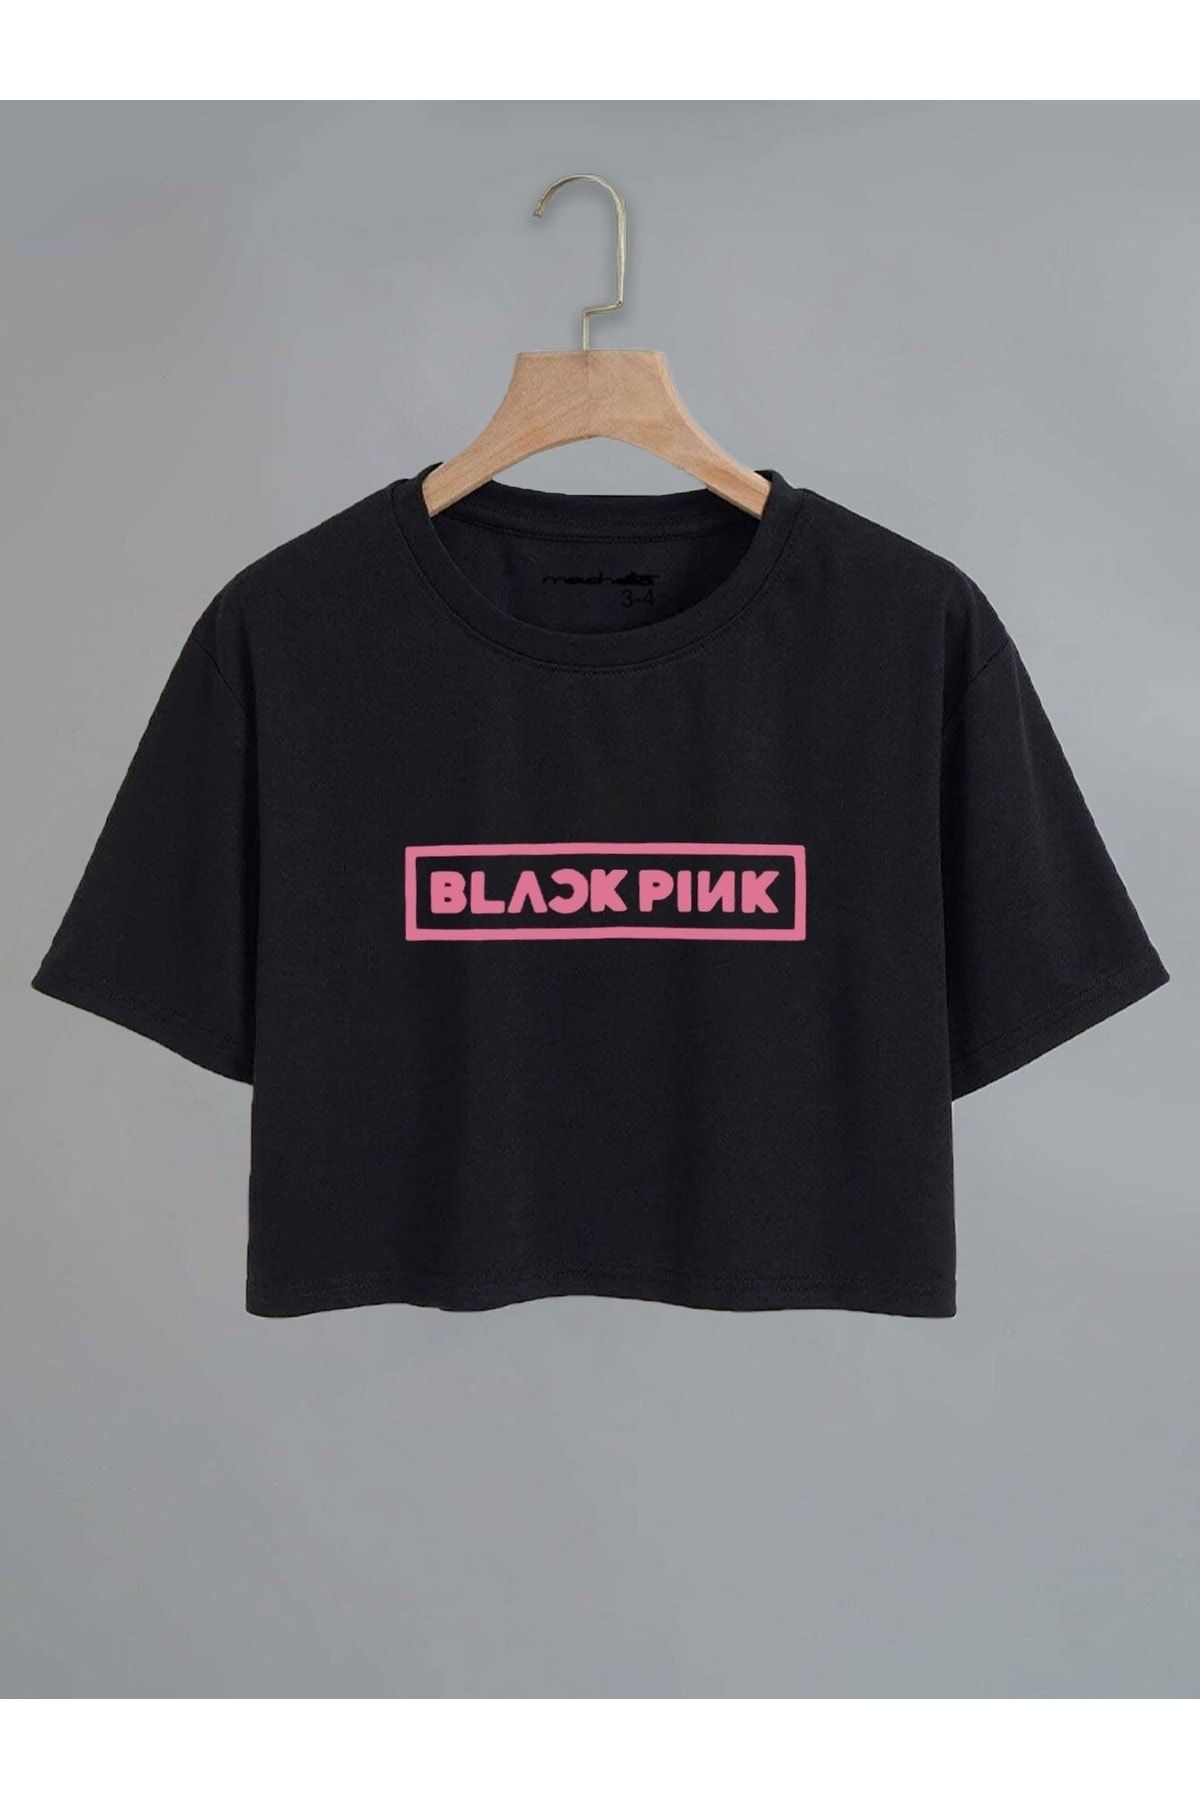 Machetta Kız Çocuk Black Pink Baskılı T-shirt Crop Bluz